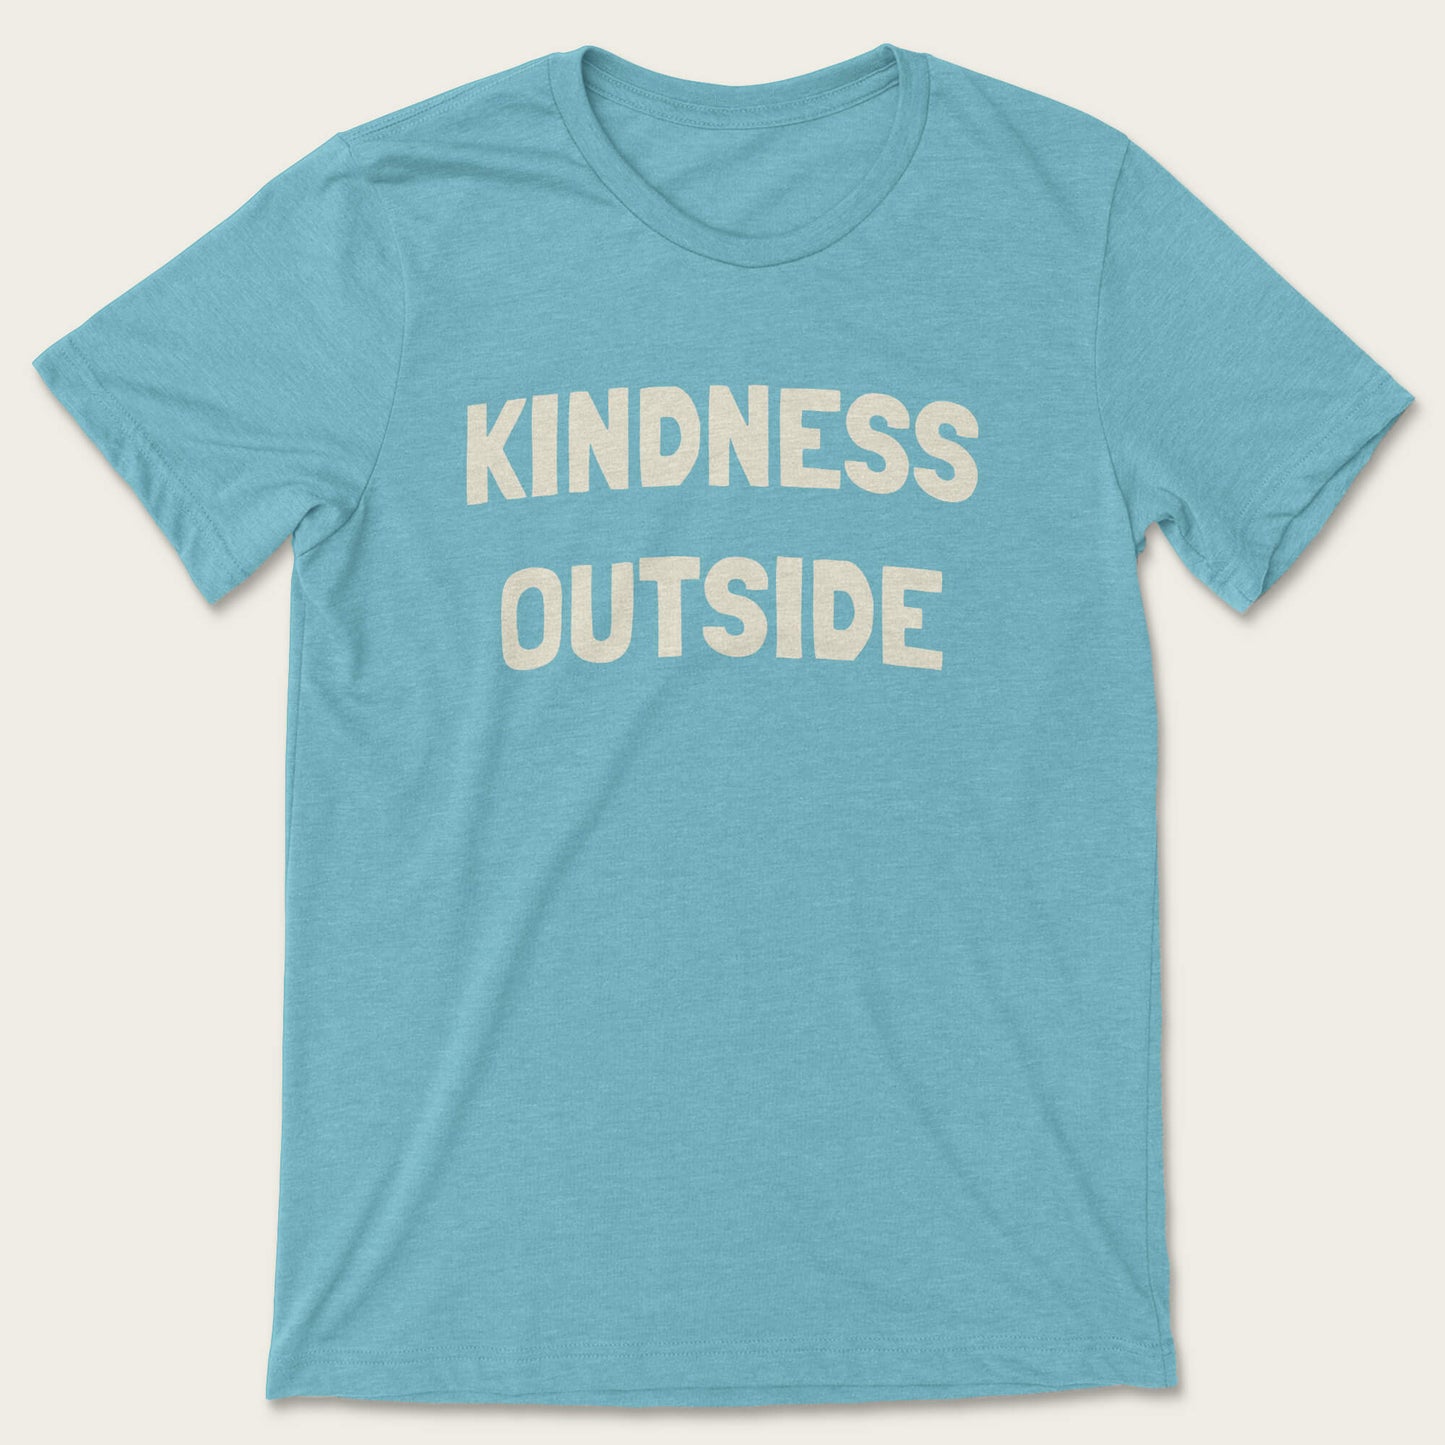 Kindness Outside Tee - Heather Blue Lagoon